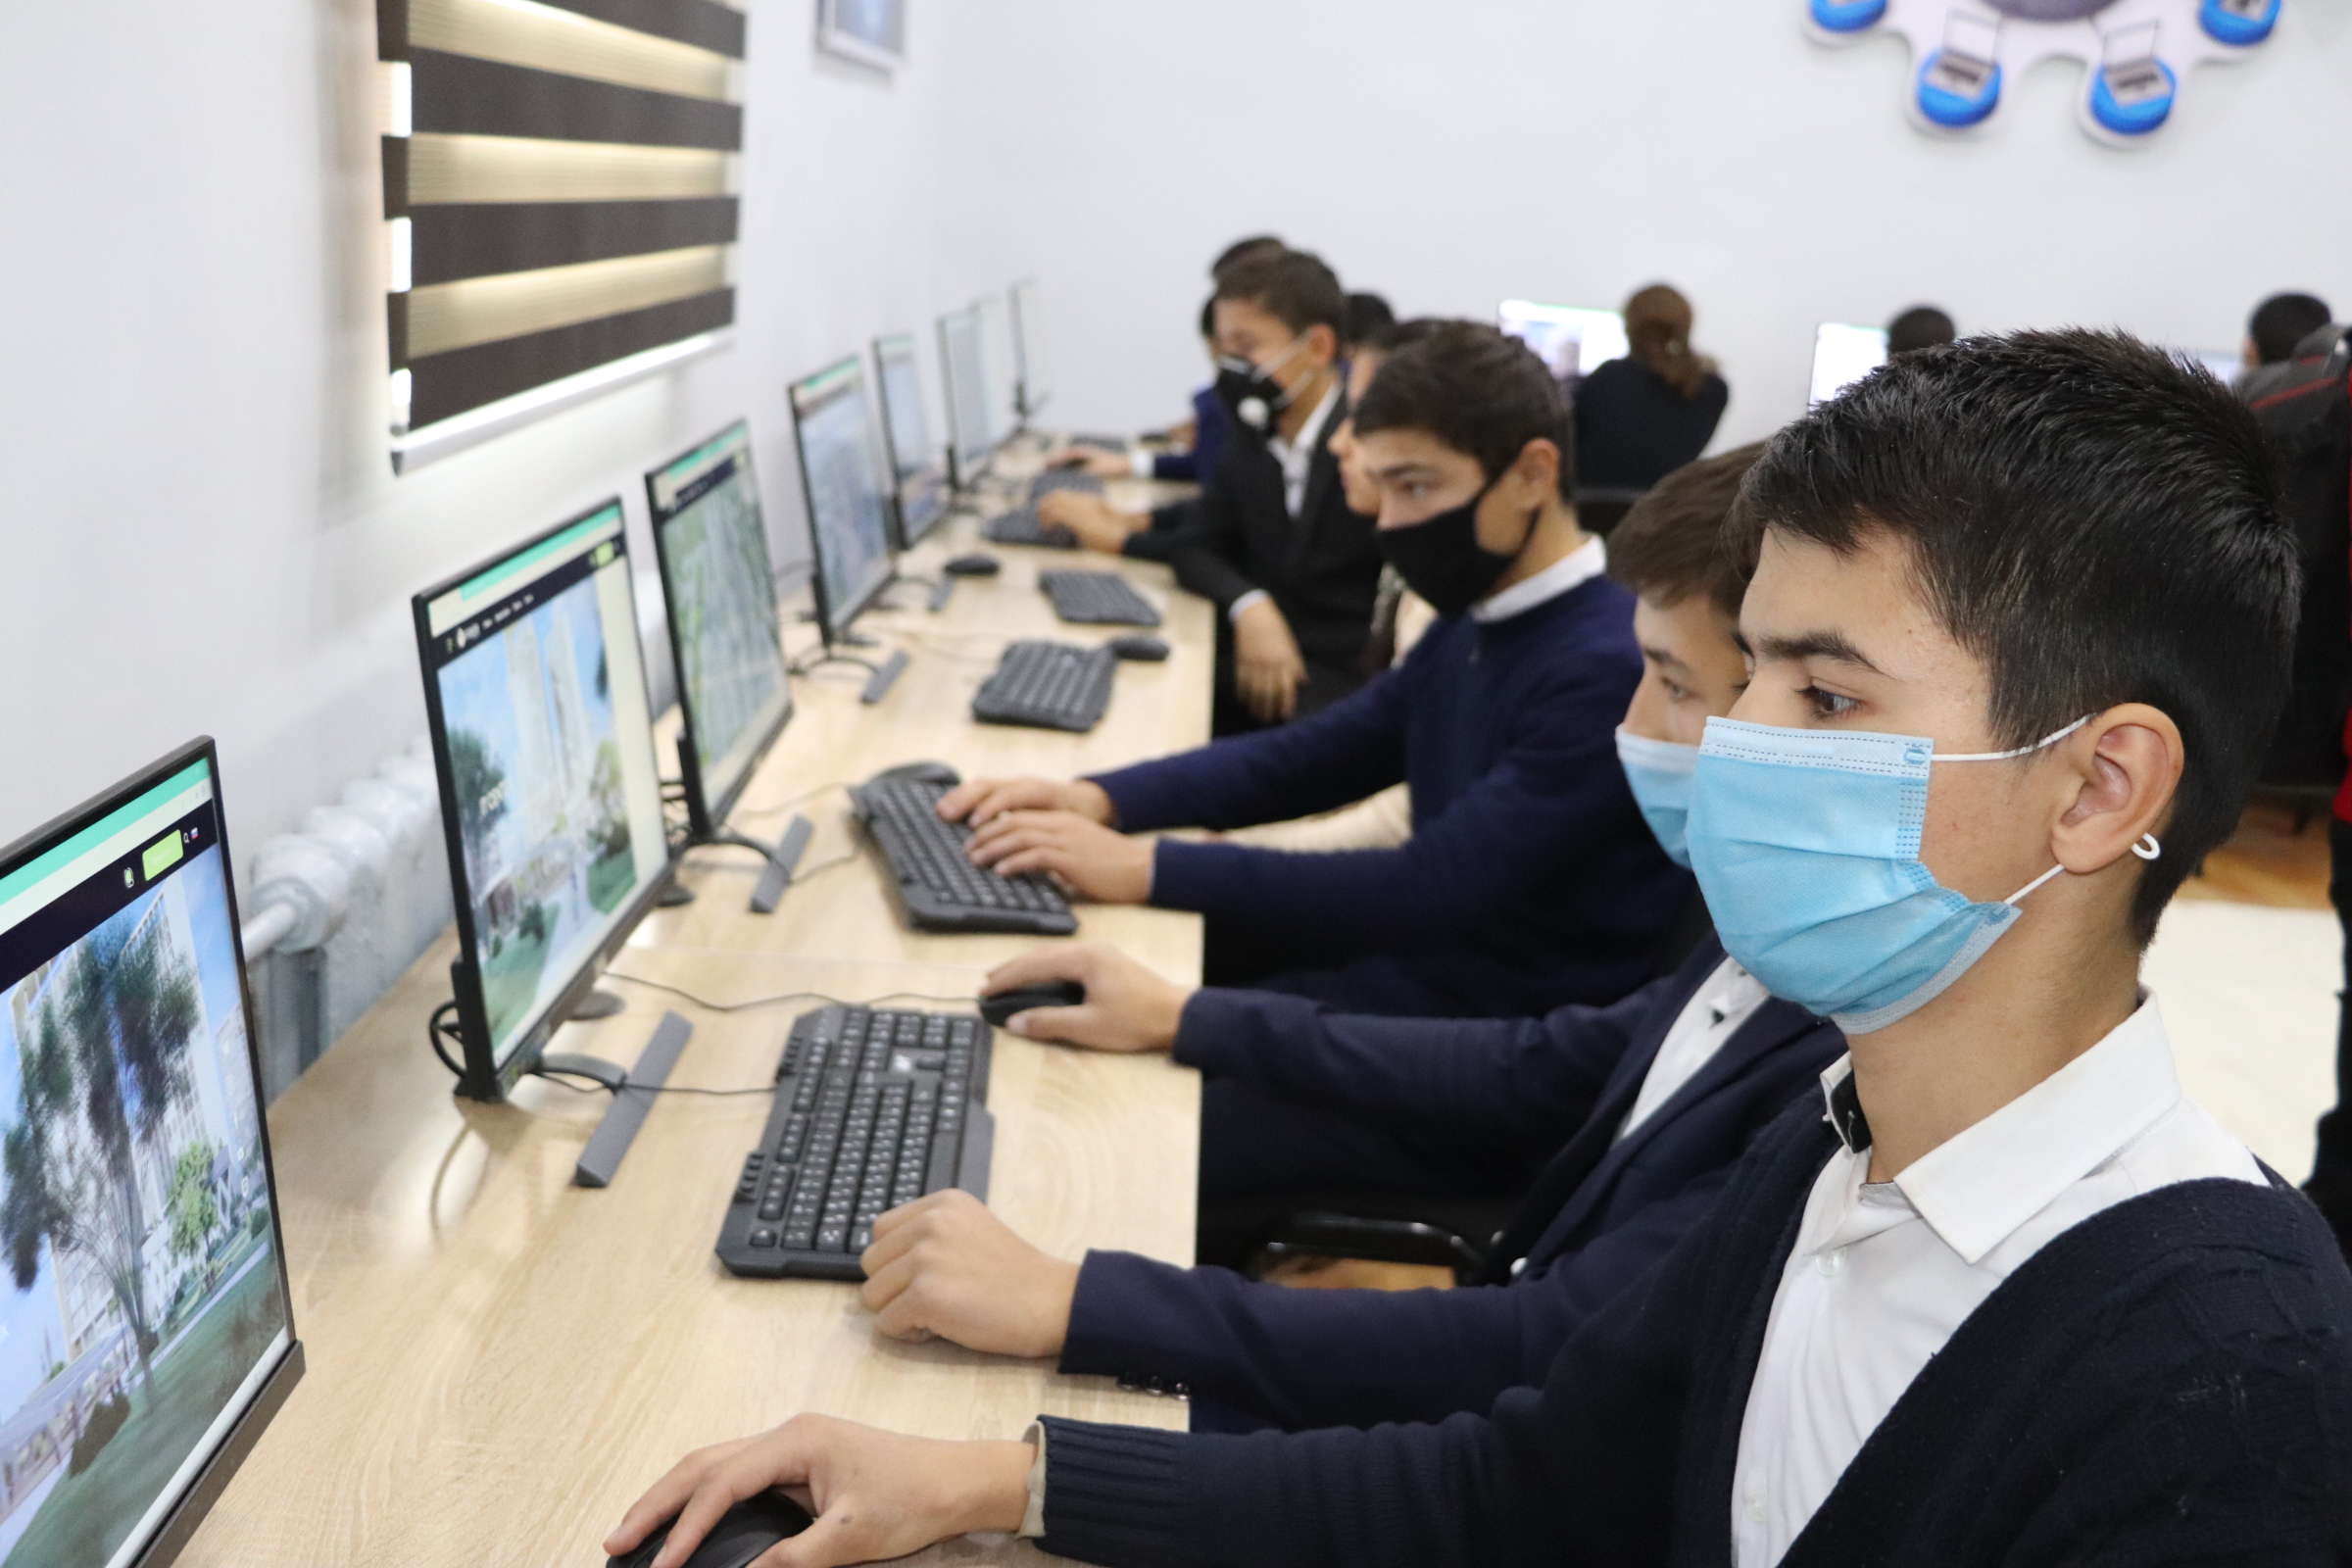 Maktab uz login parol. Информационные технологии в Узбекистане. Компьютер технологиялари. Информатика ахборот технологиялари. Современные технологии в Узбекистане.